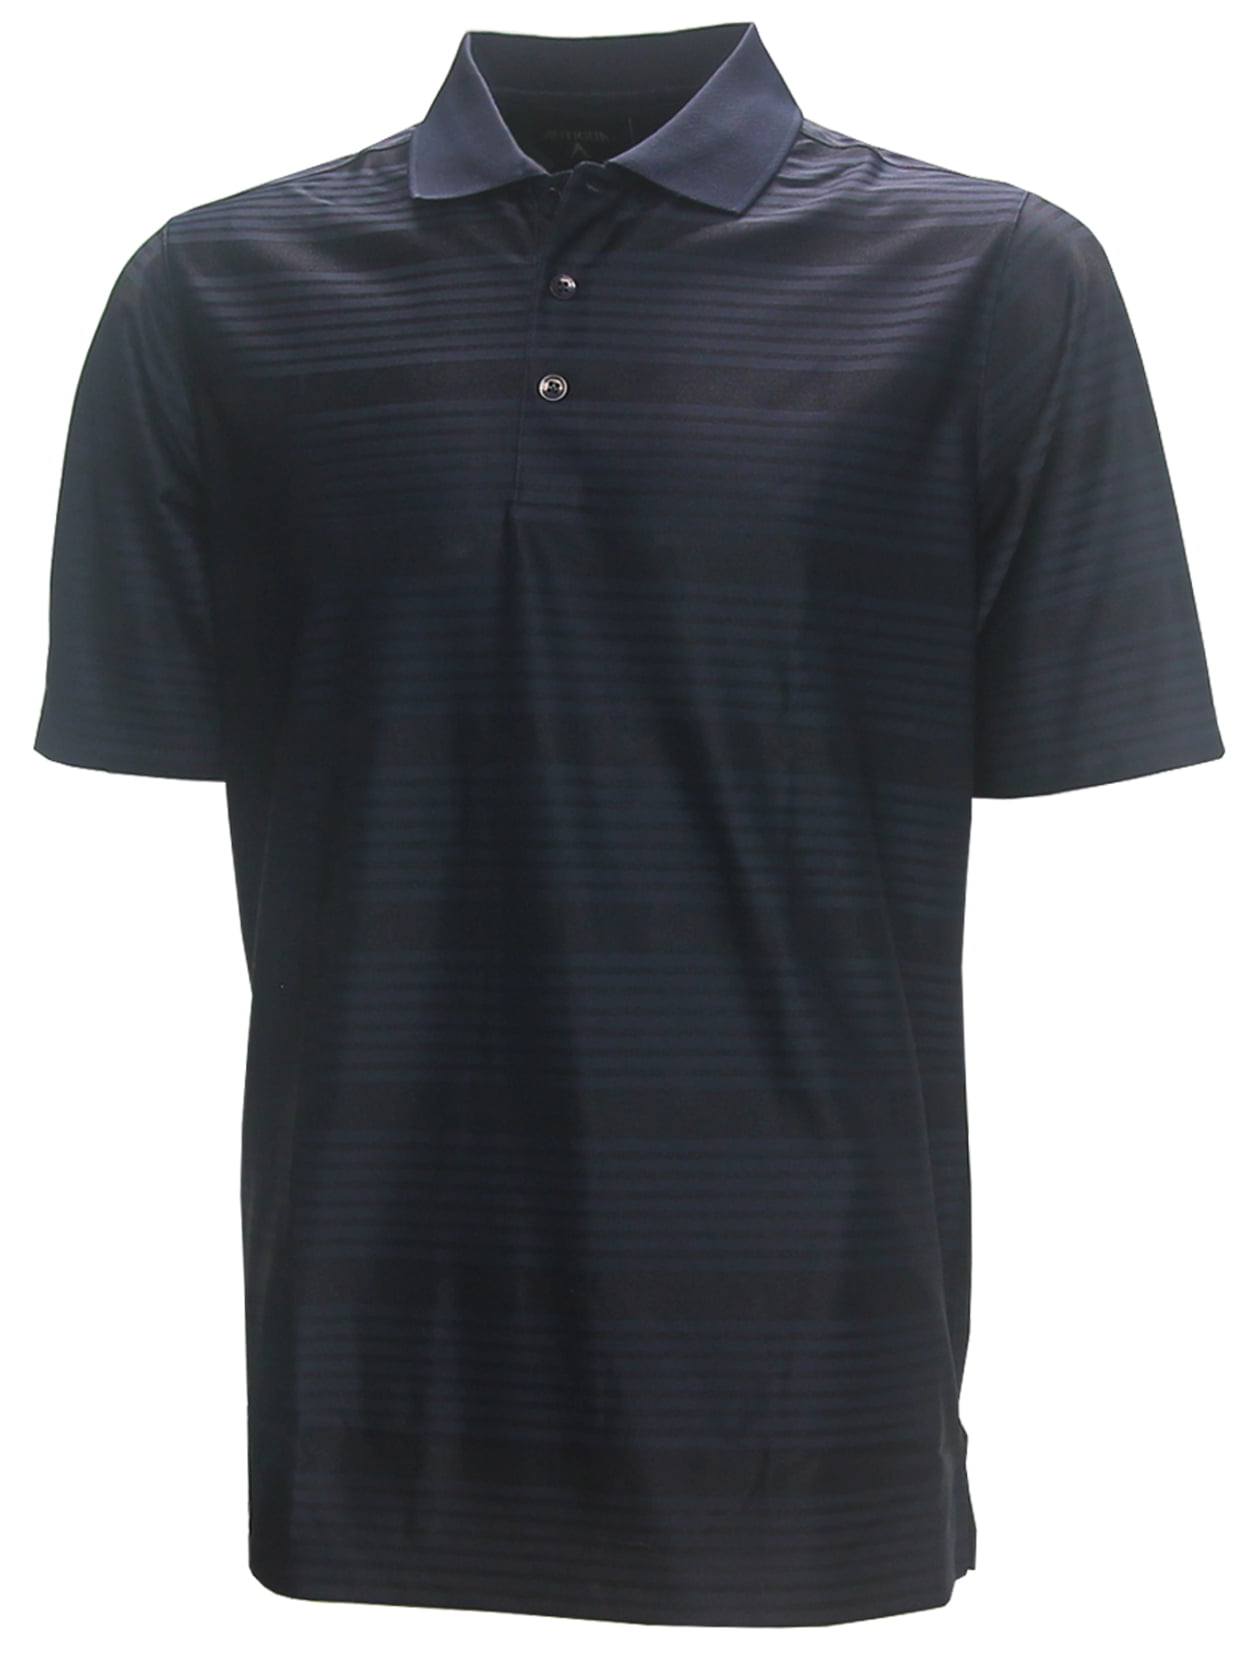 Antigua Illusion Desert Dry X-Lite Performance Polo Golf Shirt, 4X ...